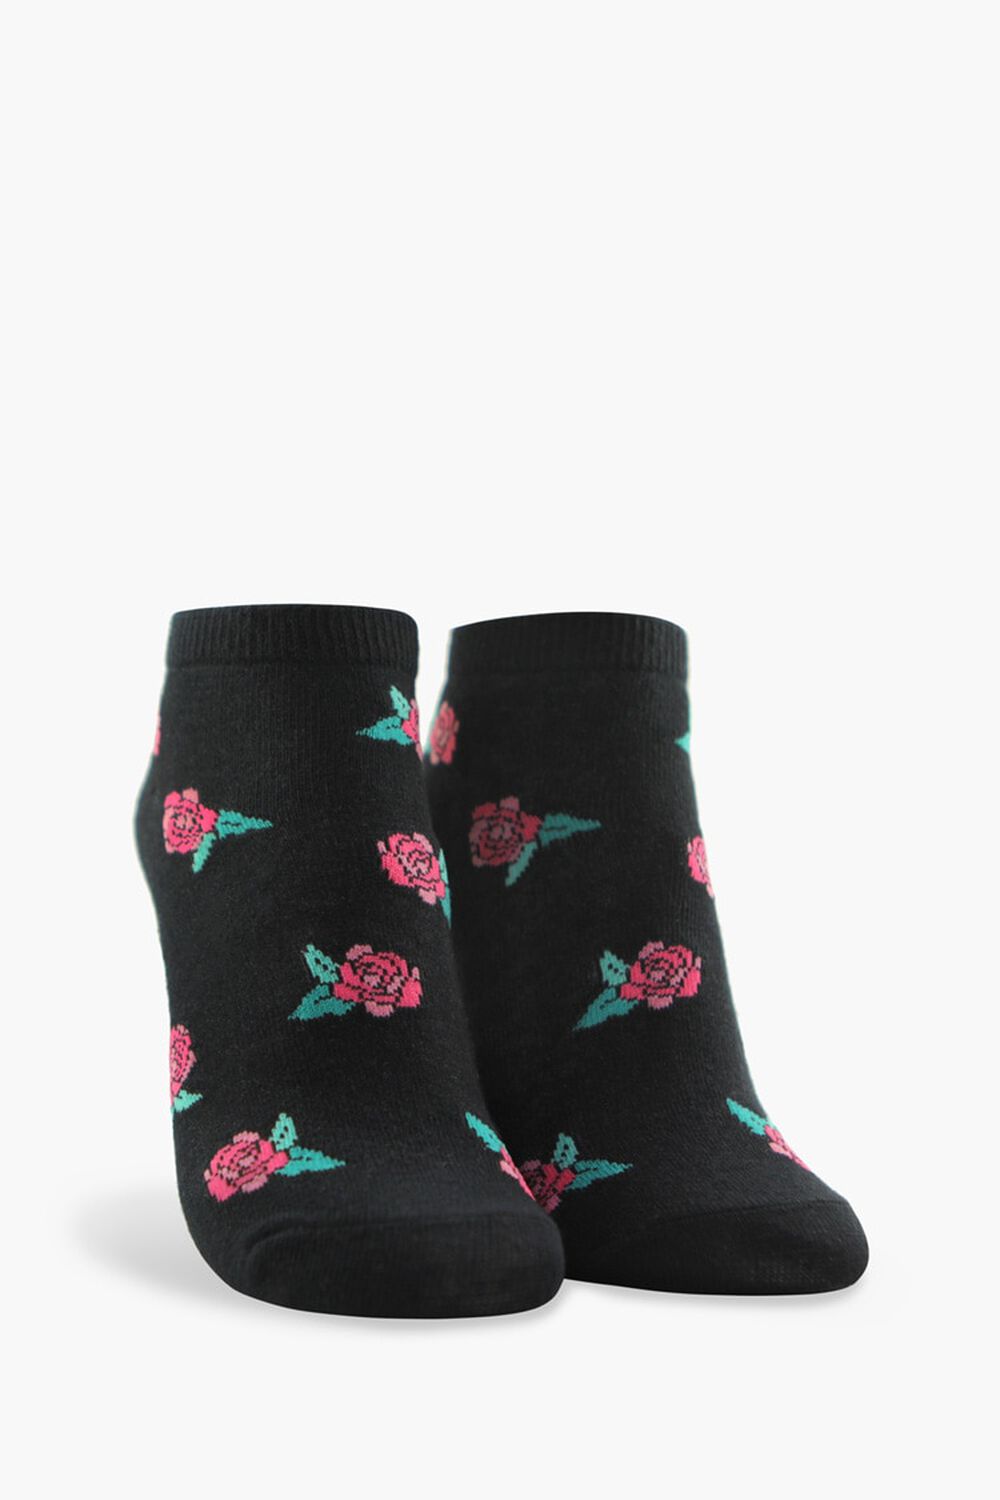 Rose Print Ankle Socks, image 1